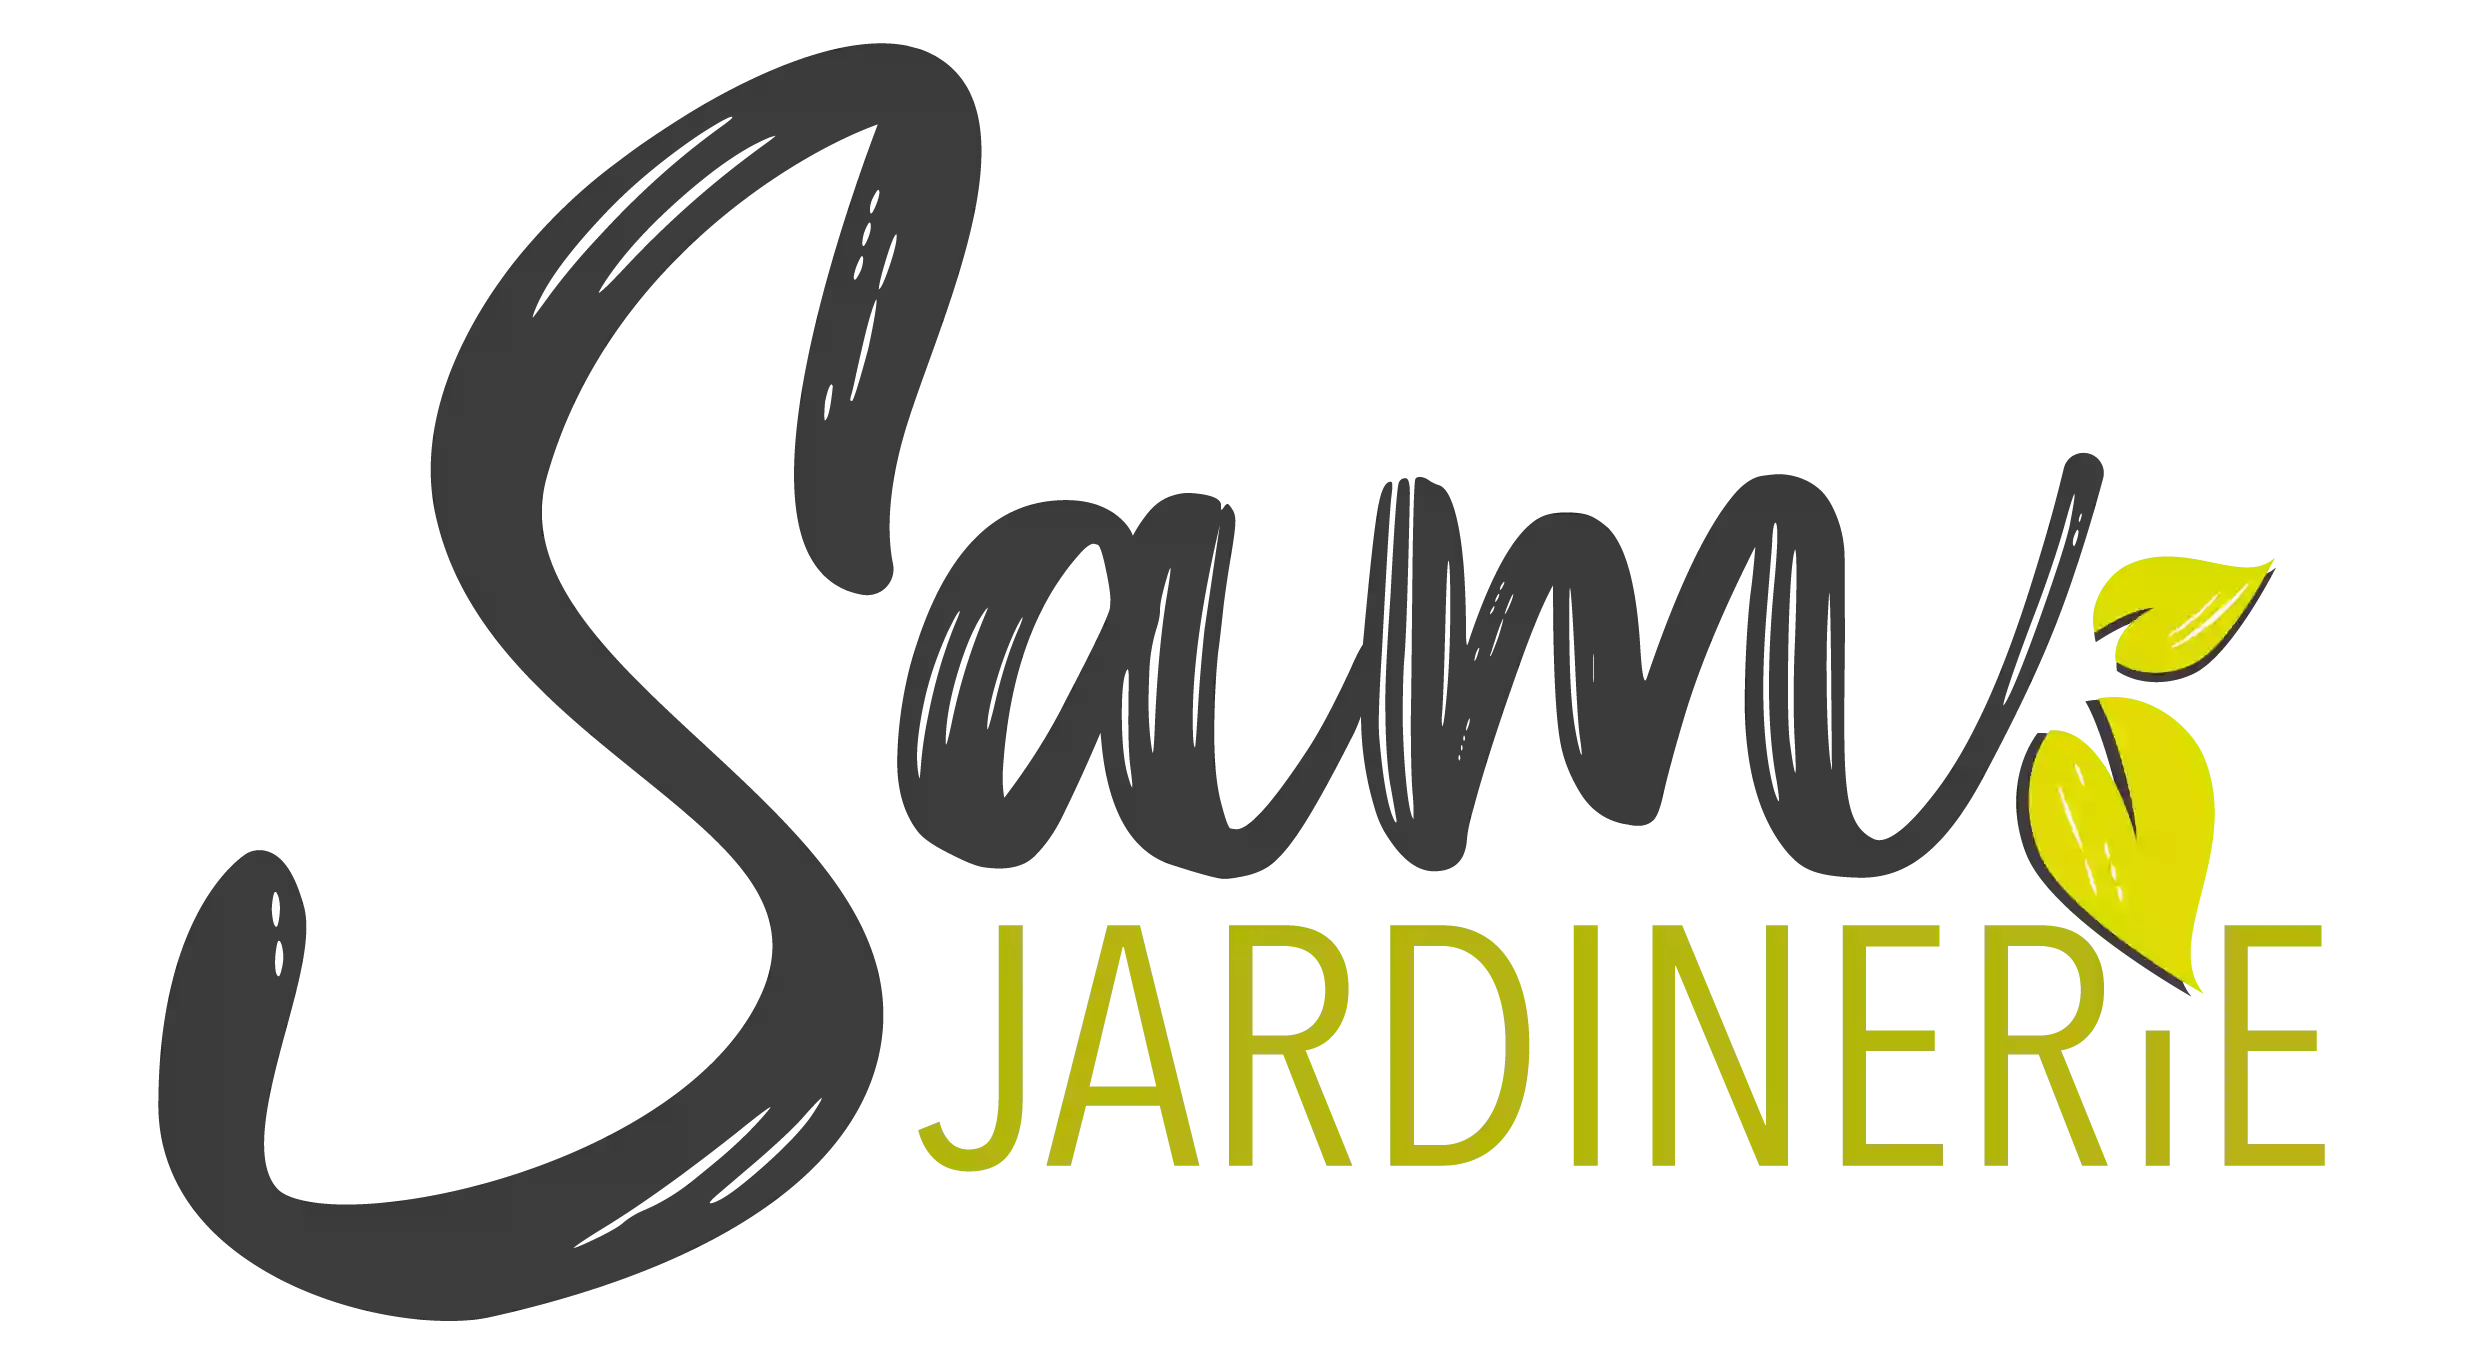 Sam Le Jardinier